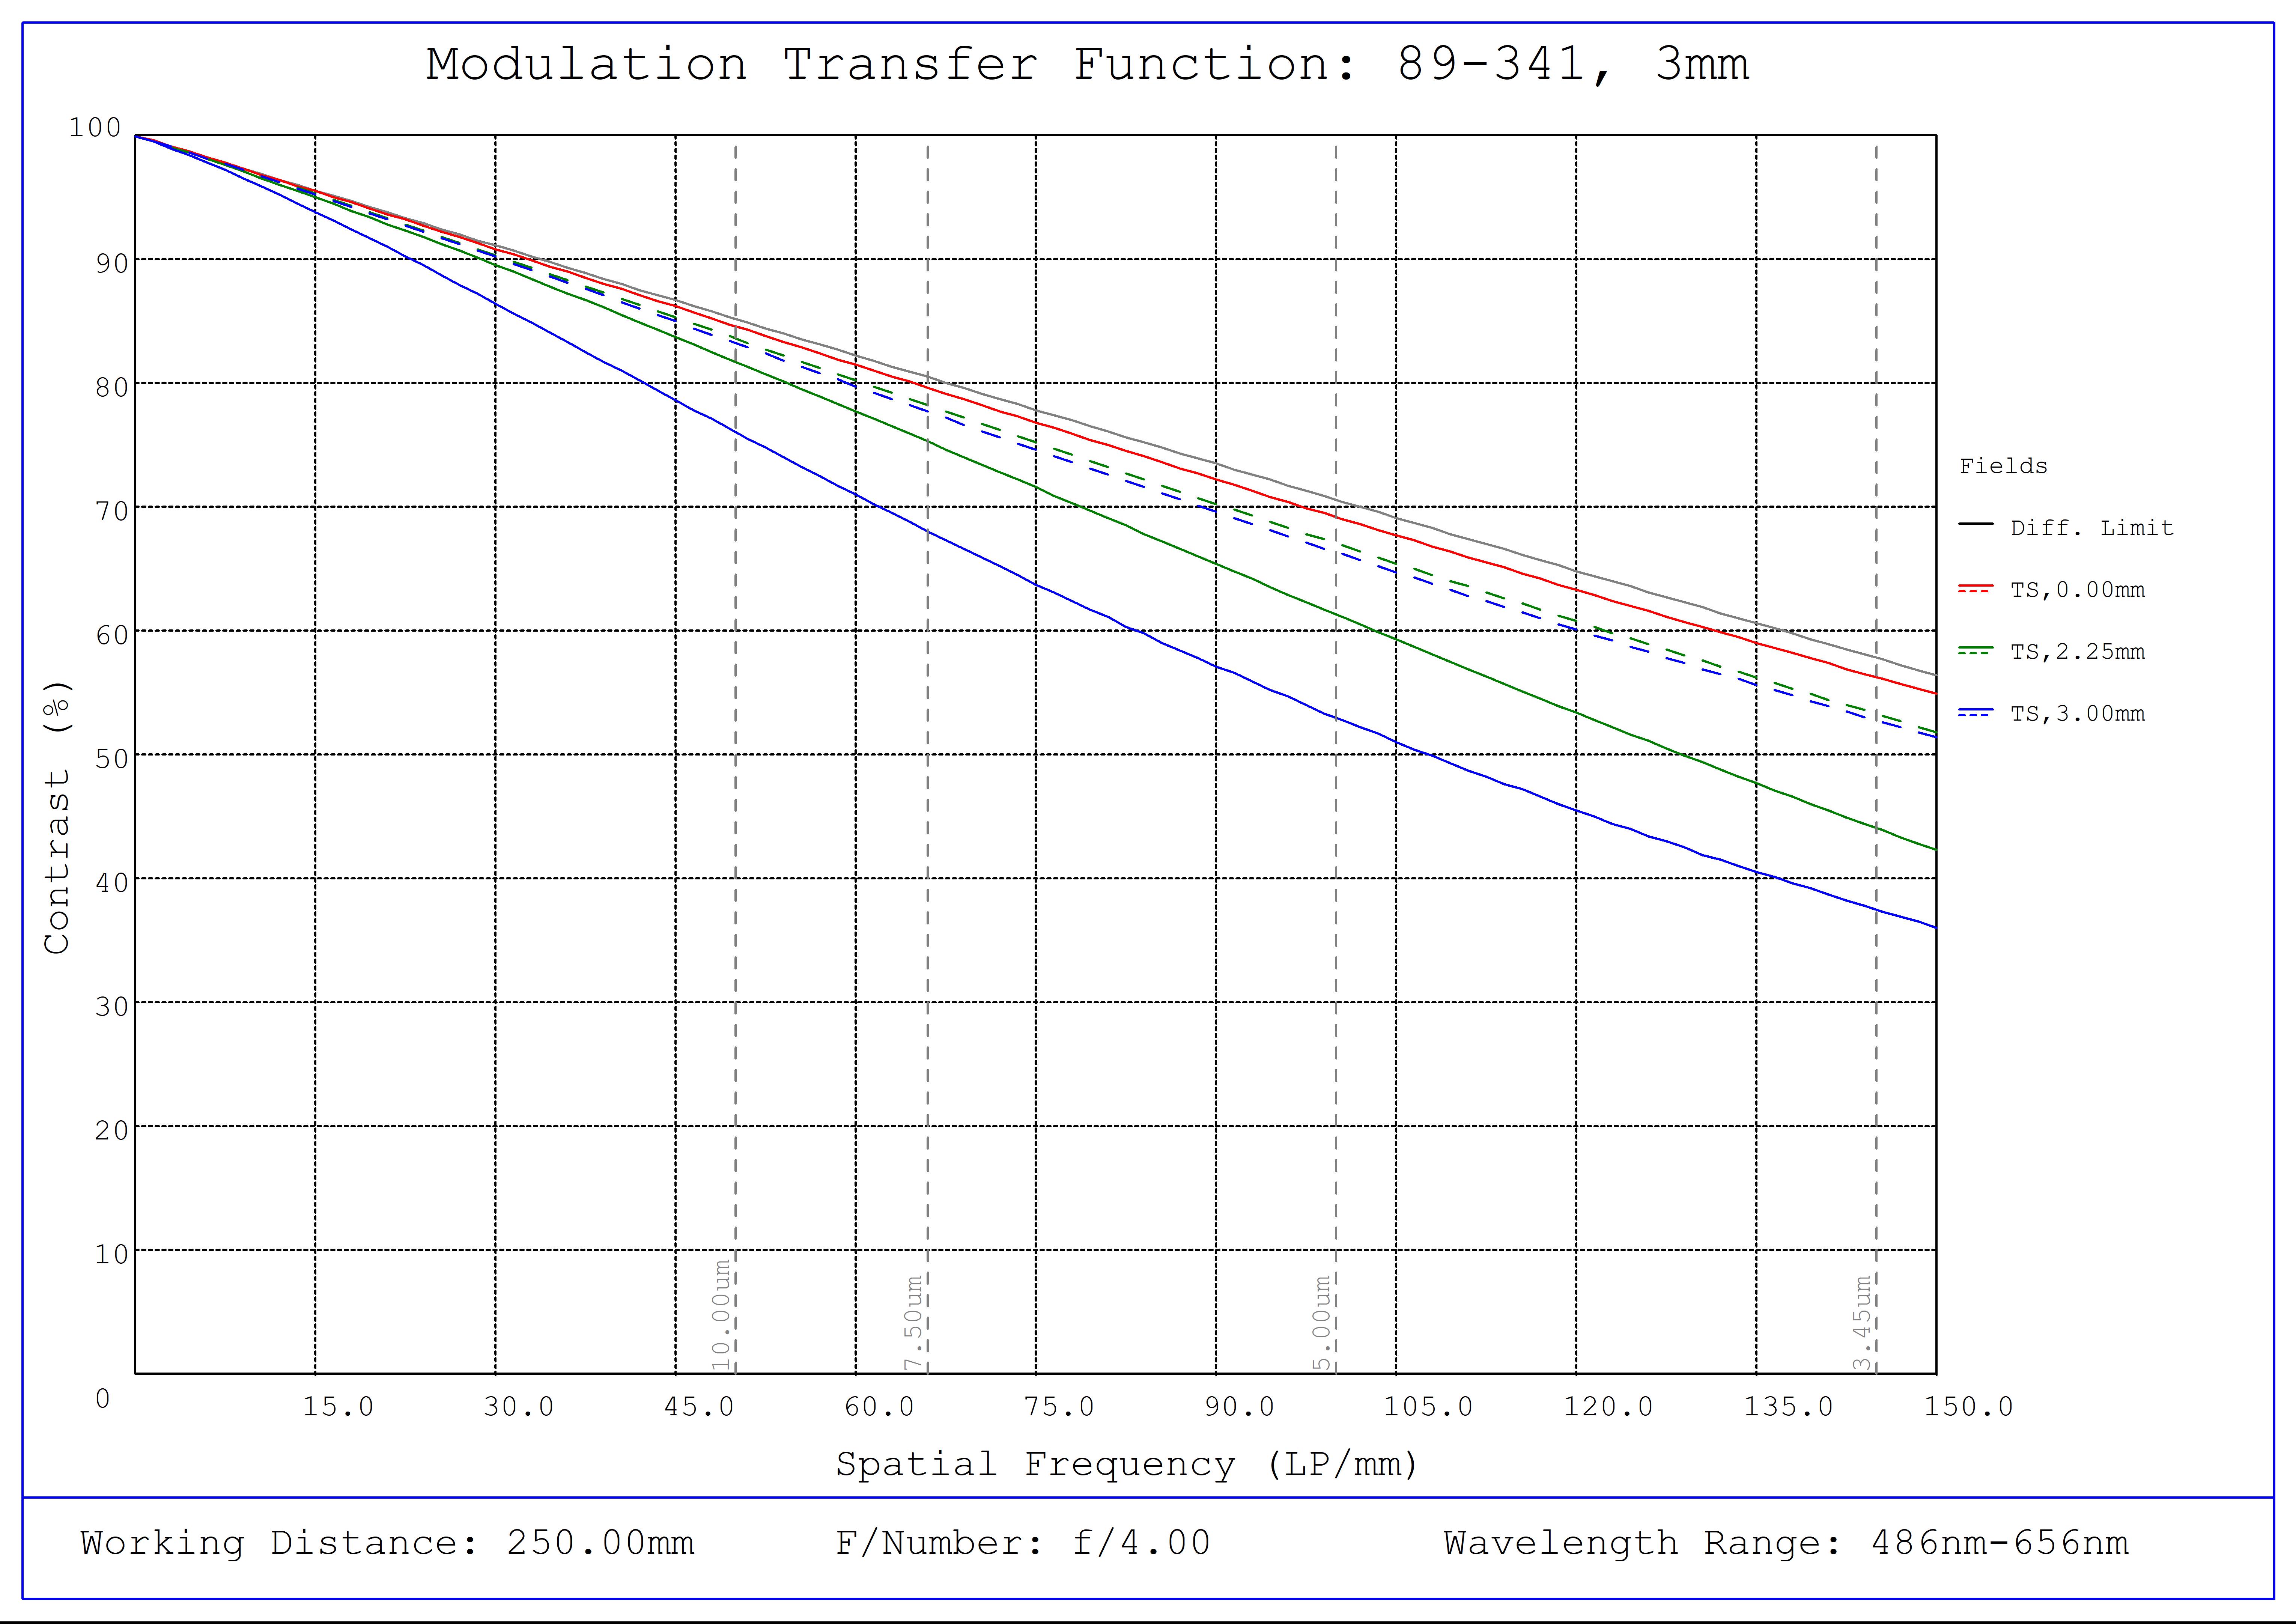 #89-341, 3mm FL f/4.0, Blue Series M12 Lens, Modulated Transfer Function (MTF) Plot, 250mm Working Distance, f4